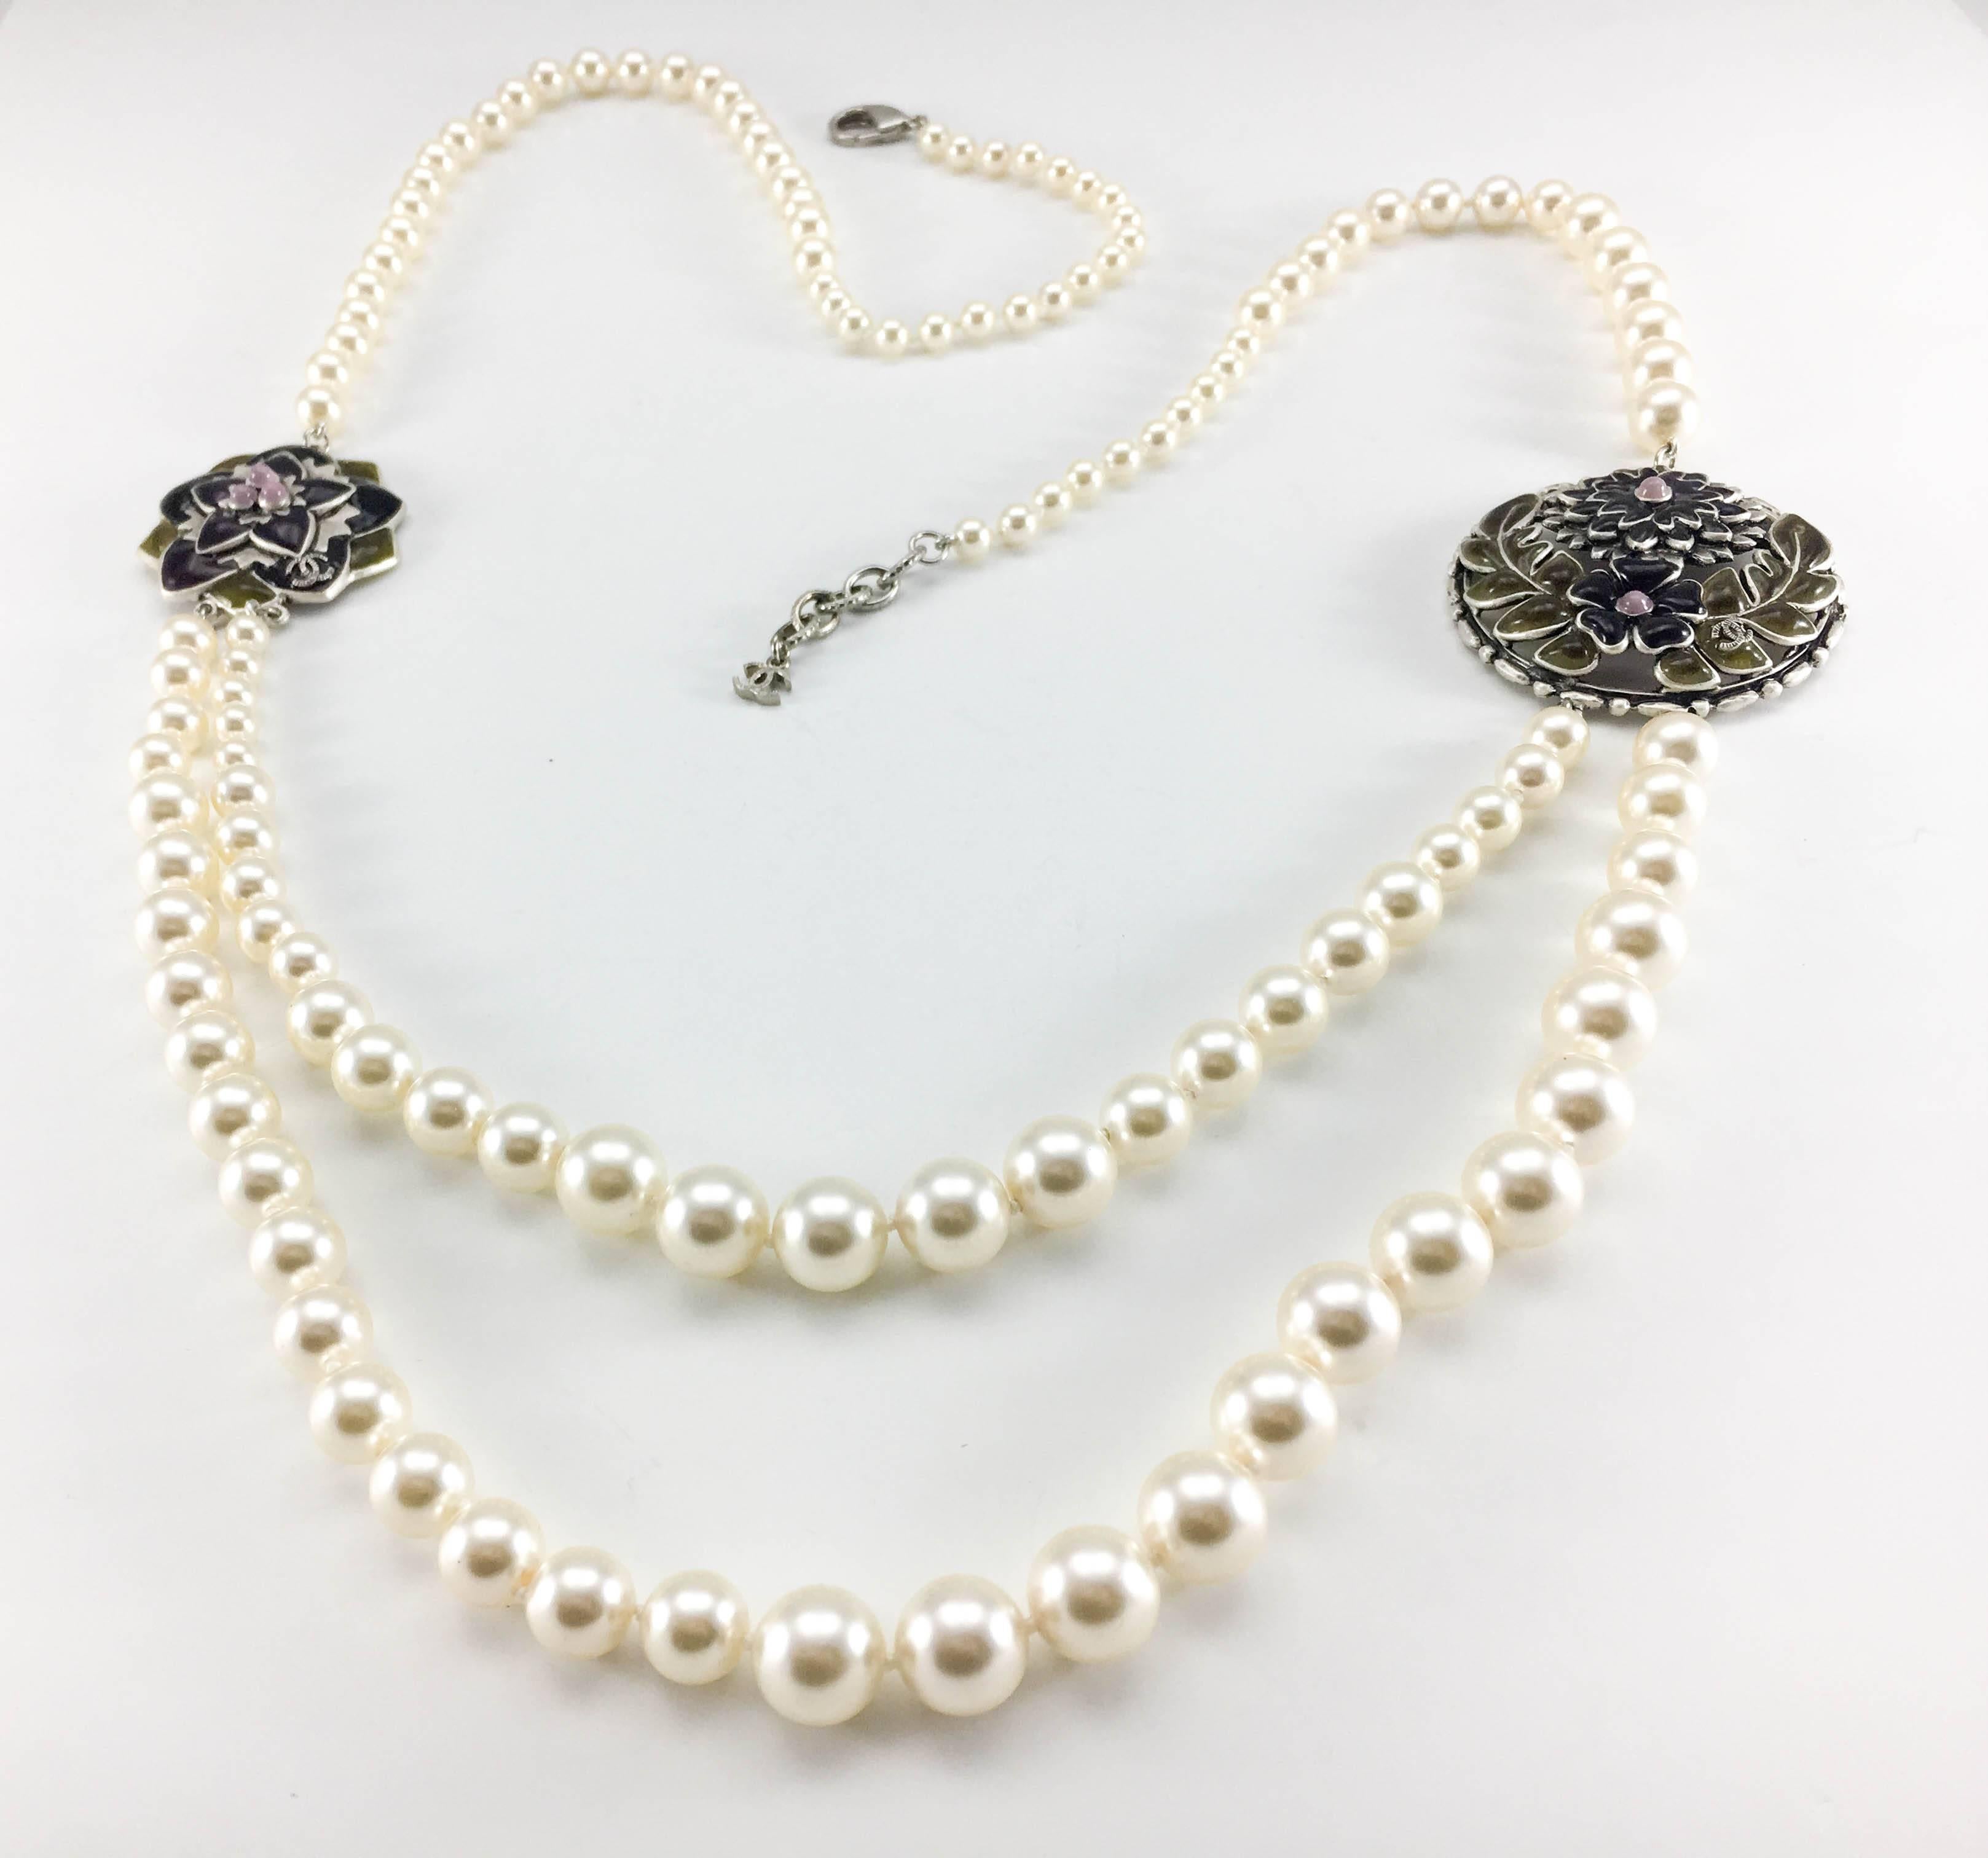 Women's 2015 Chanel Long Faux Pearl and Gripoix Sautoir Necklace